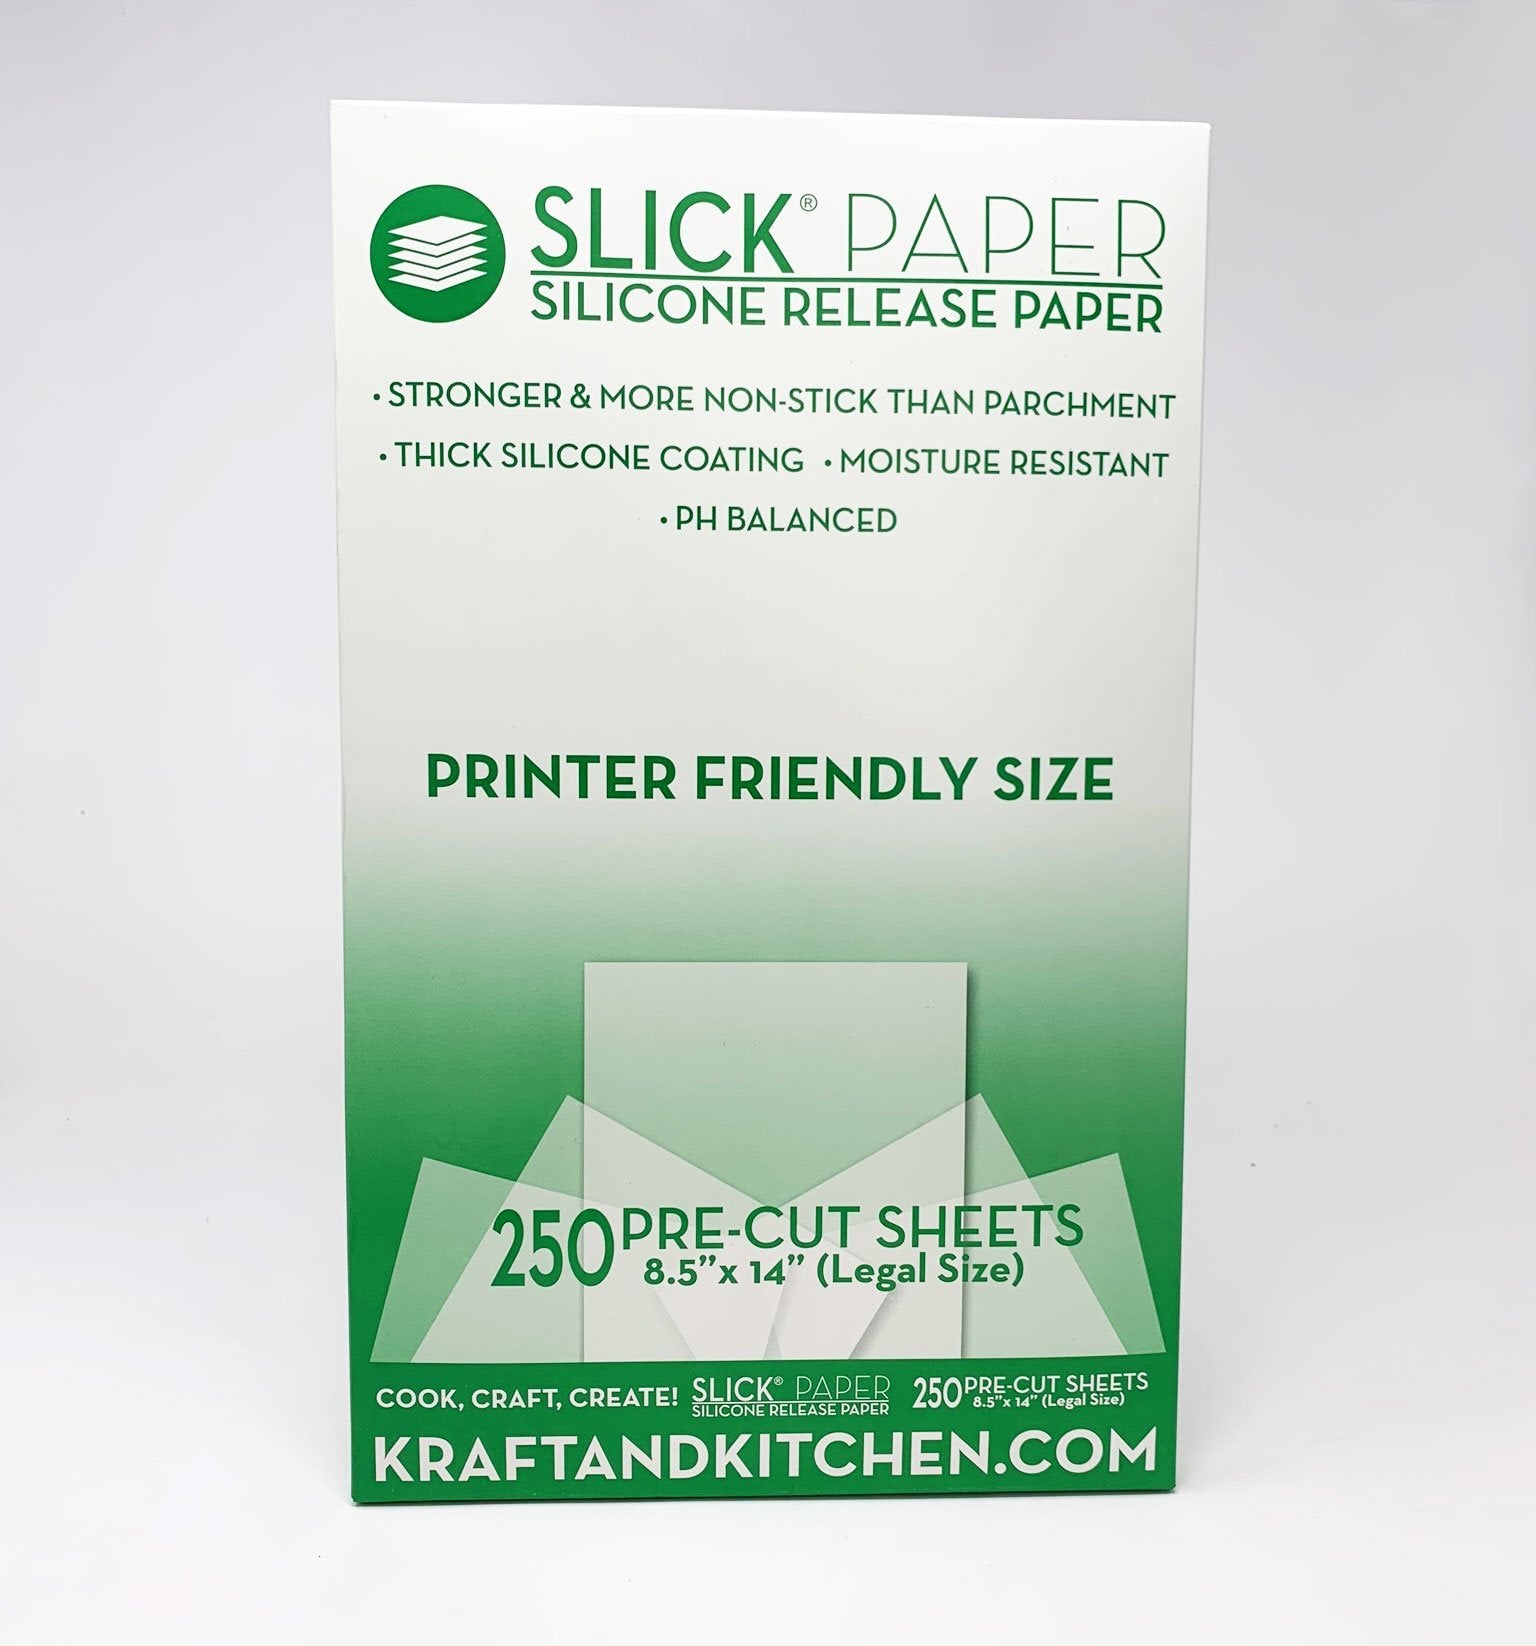 Silicone release paper Nonstick coated Glassine paper - Kraft & Kitchen